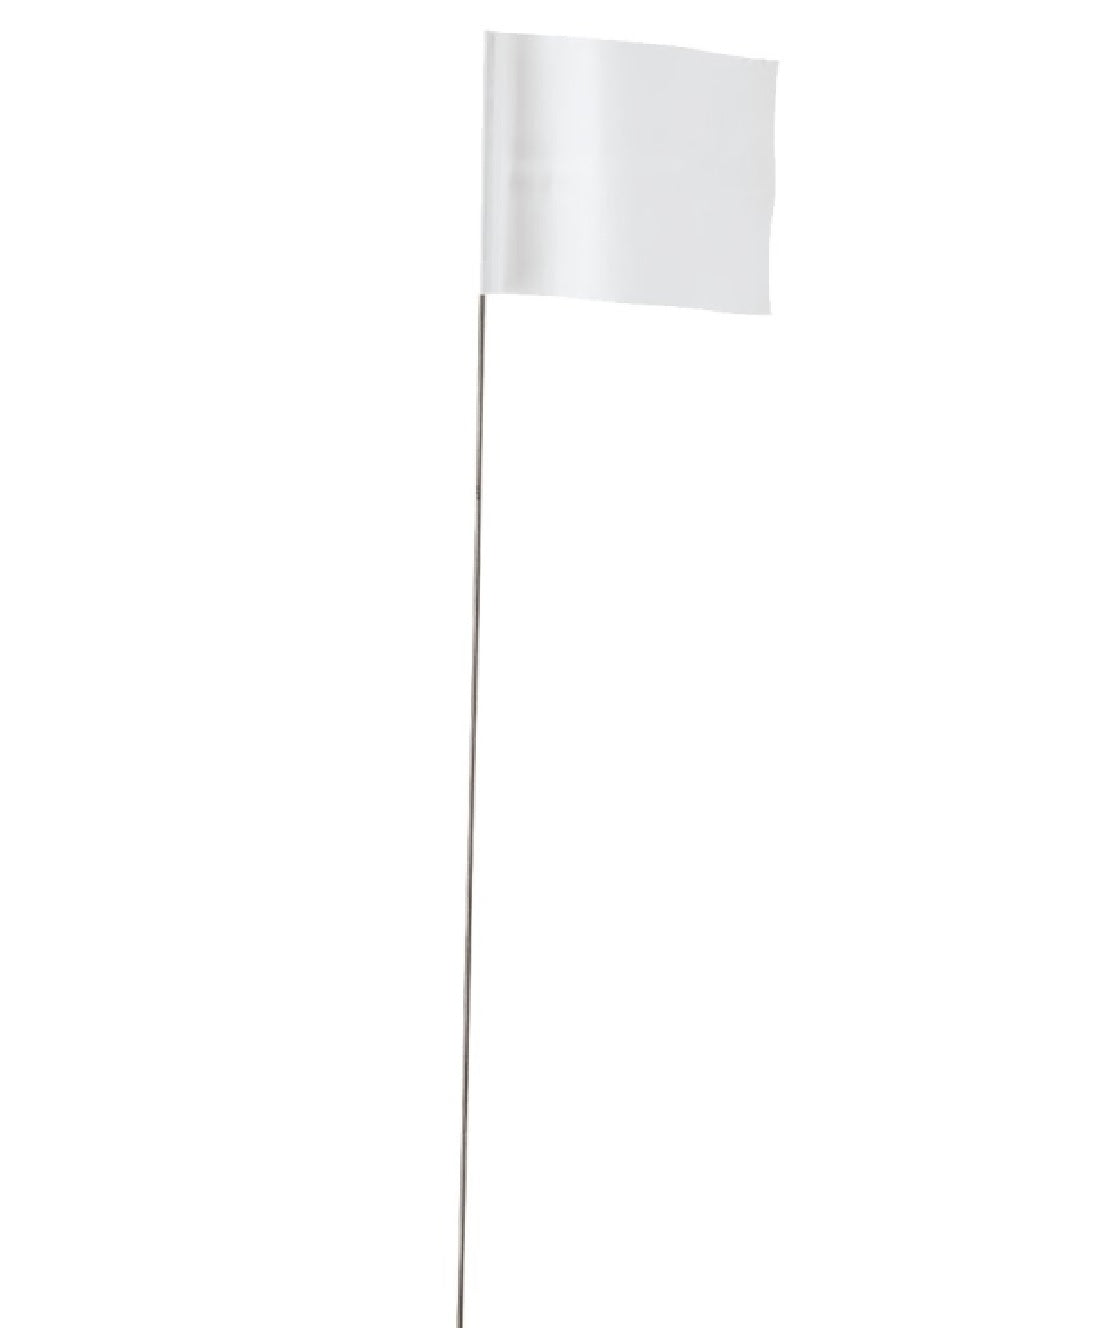 Empire 78-006 Plastic Stake Flag, White, 2-1/2 Inch H x 3-1/2 Inch W